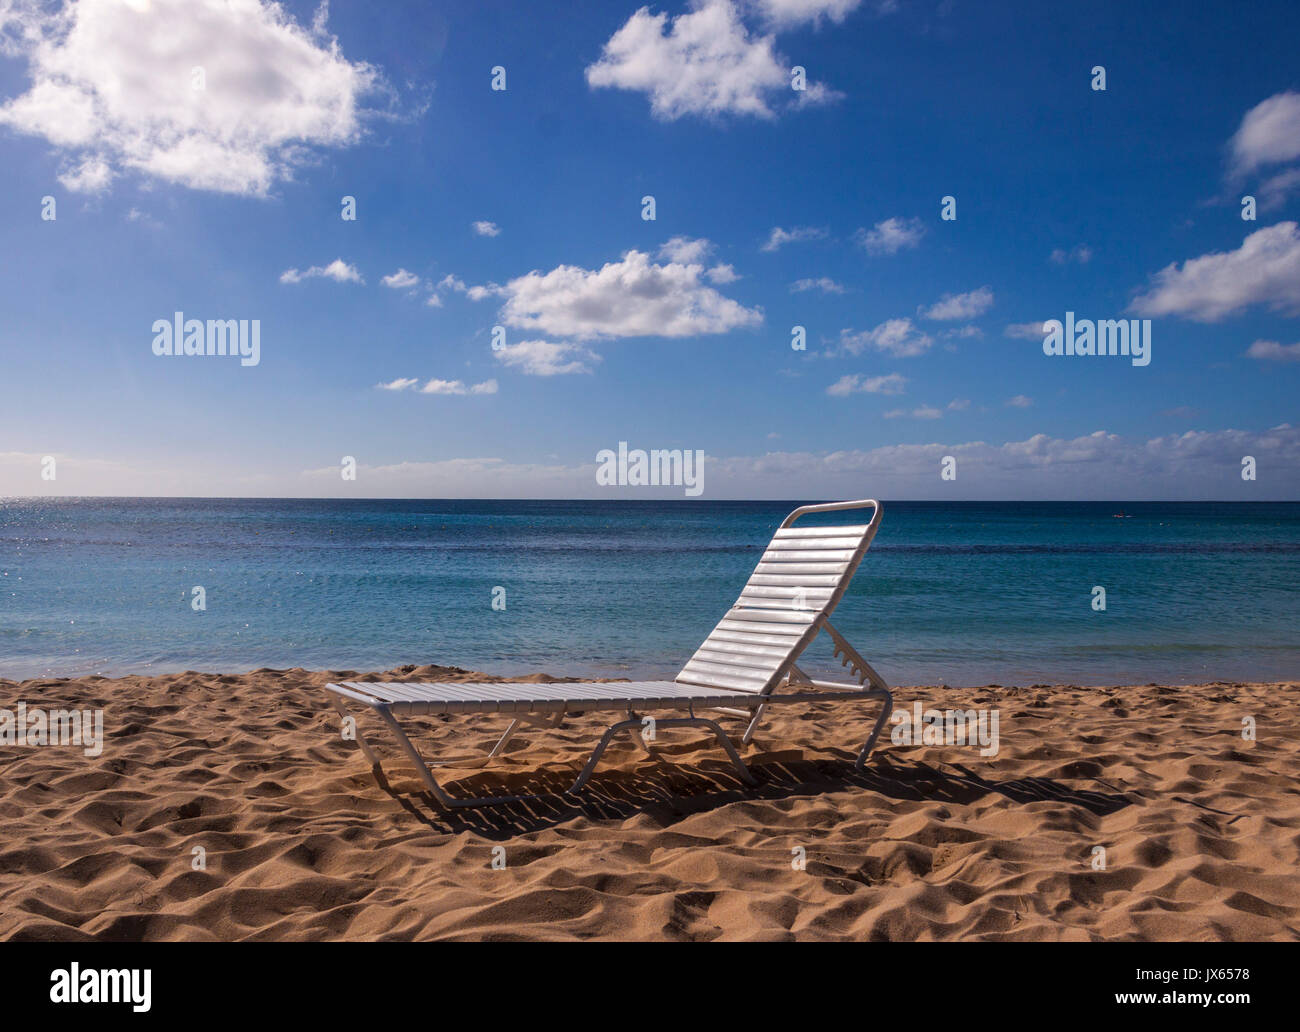 An empty sun lounger on the beach at Port Saint Charles, Barbados, Caribbean Isles Stock Photo